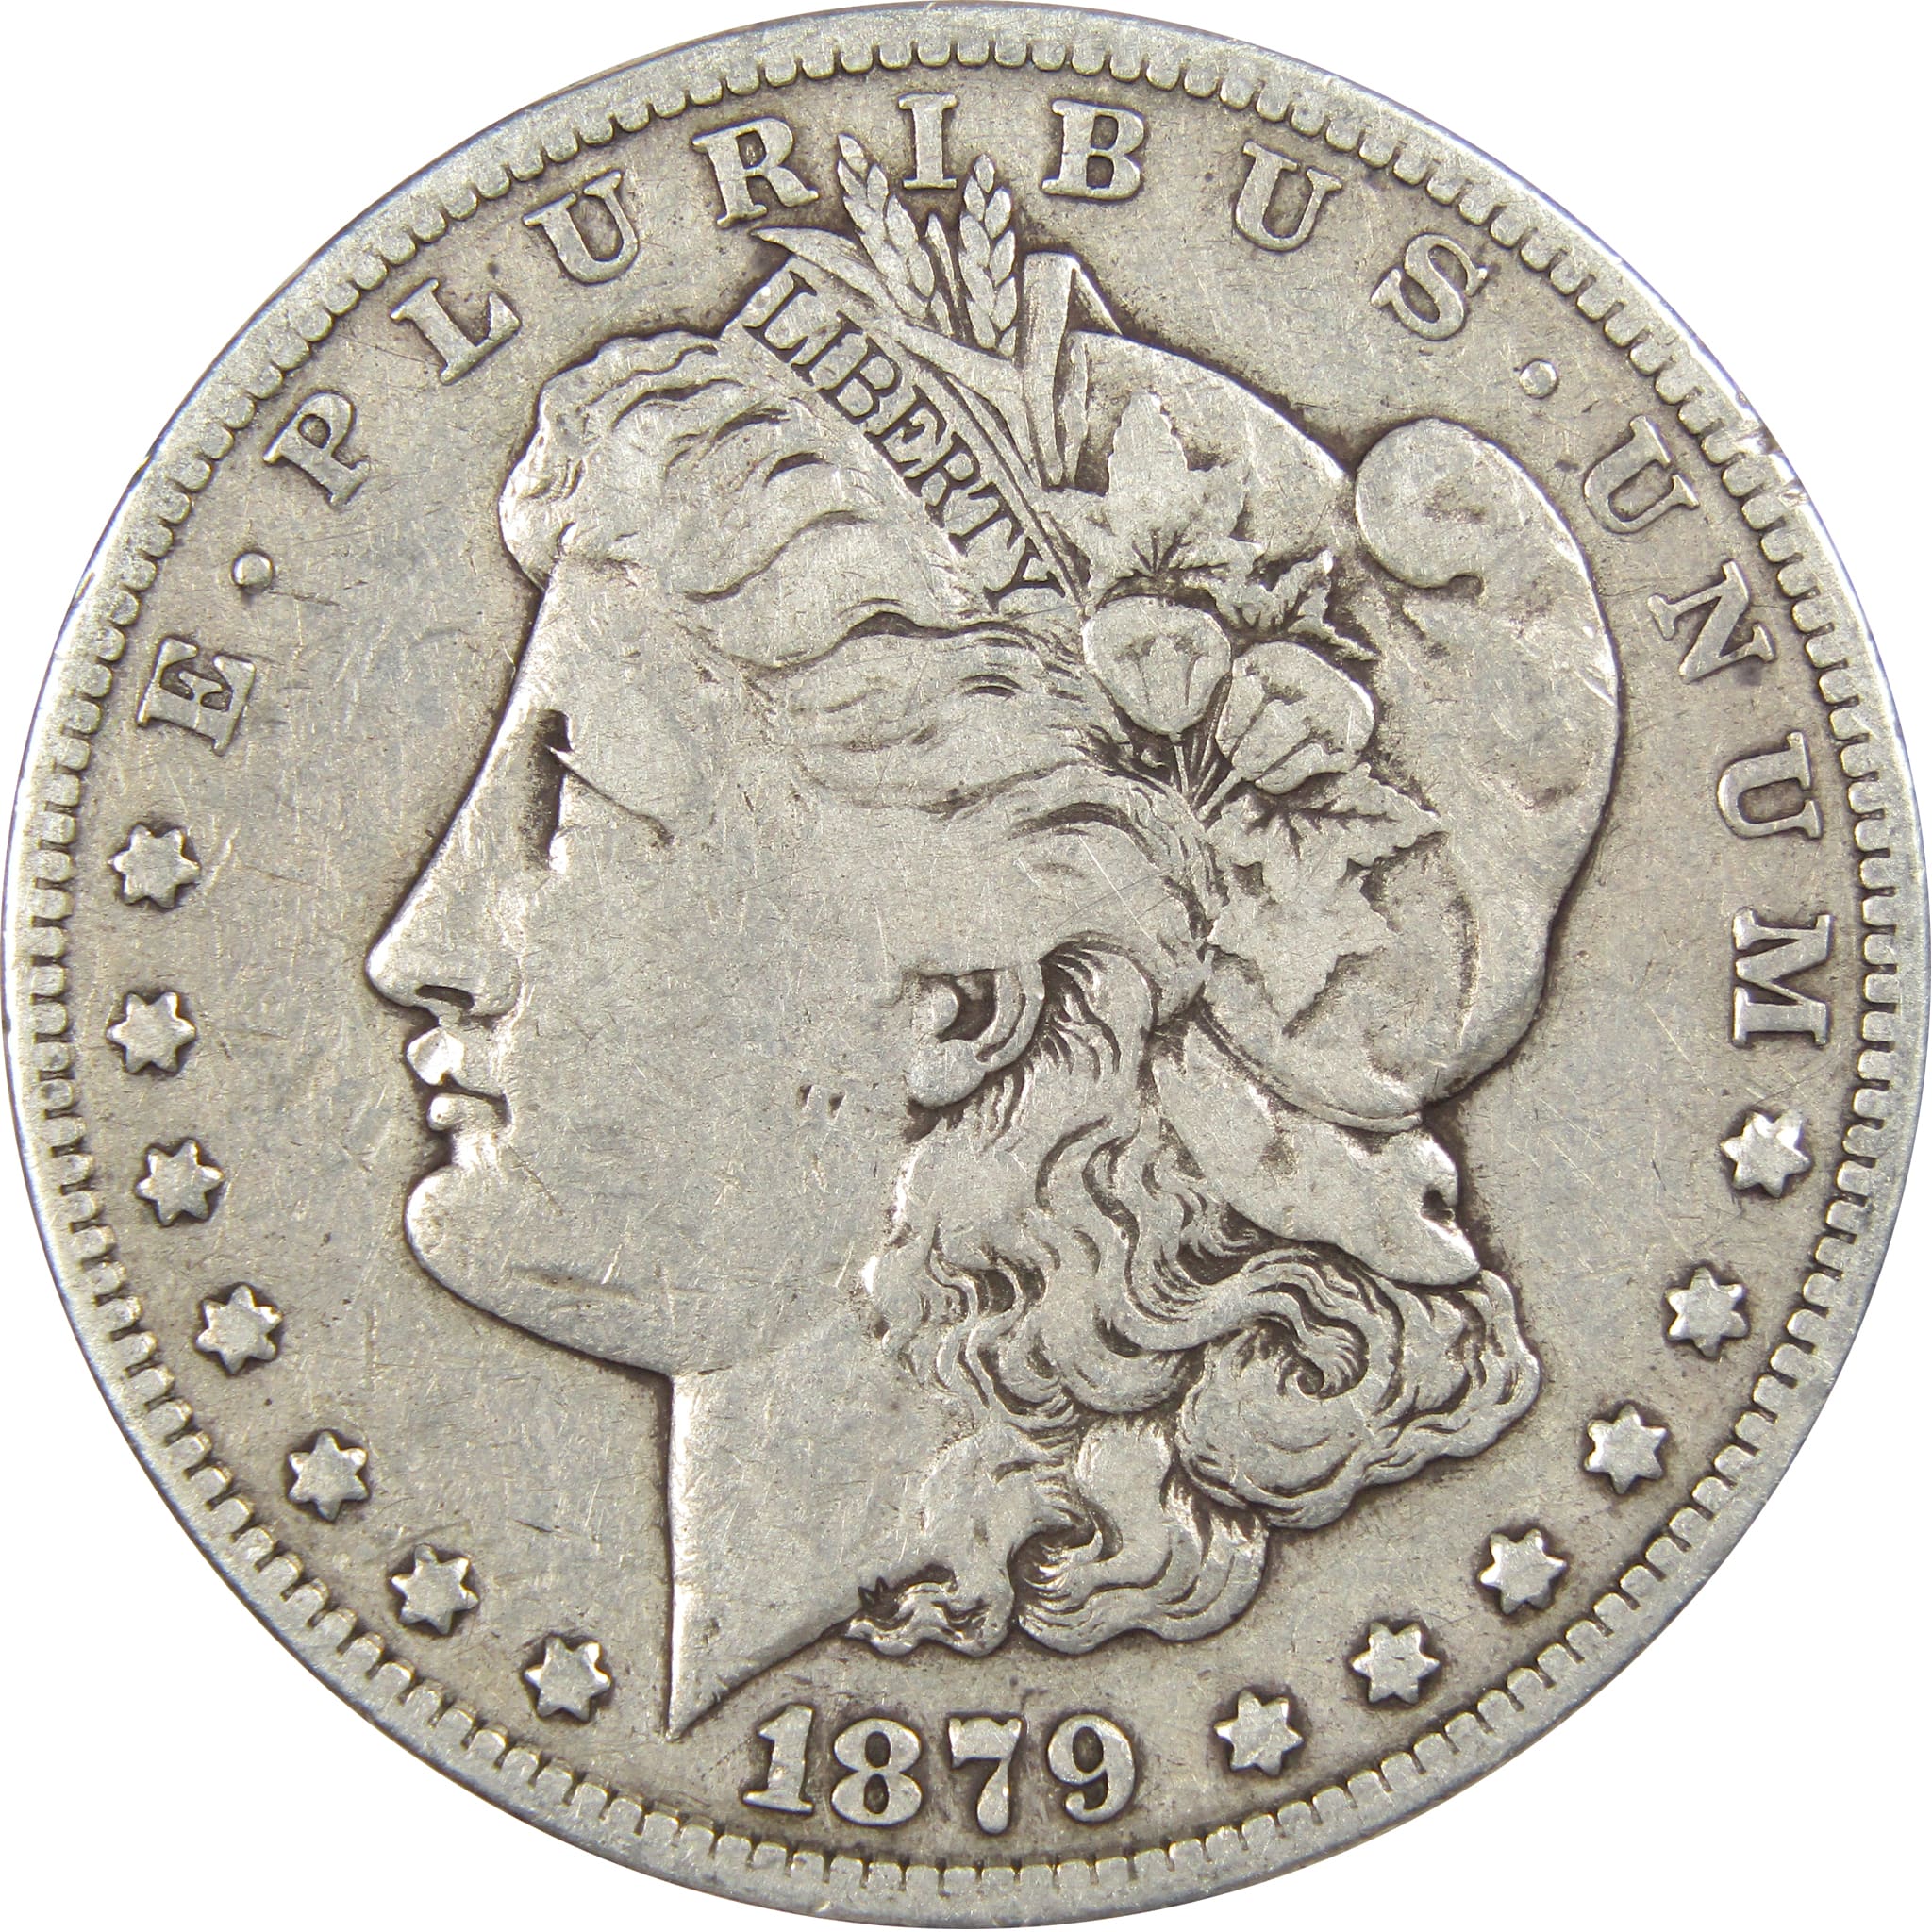 1879 S Rev 78 Morgan Dollar F Fine 90% Silver US Coin SKU:IPC7481 - Morgan coin - Morgan silver dollar - Morgan silver dollar for sale - Profile Coins &amp; Collectibles